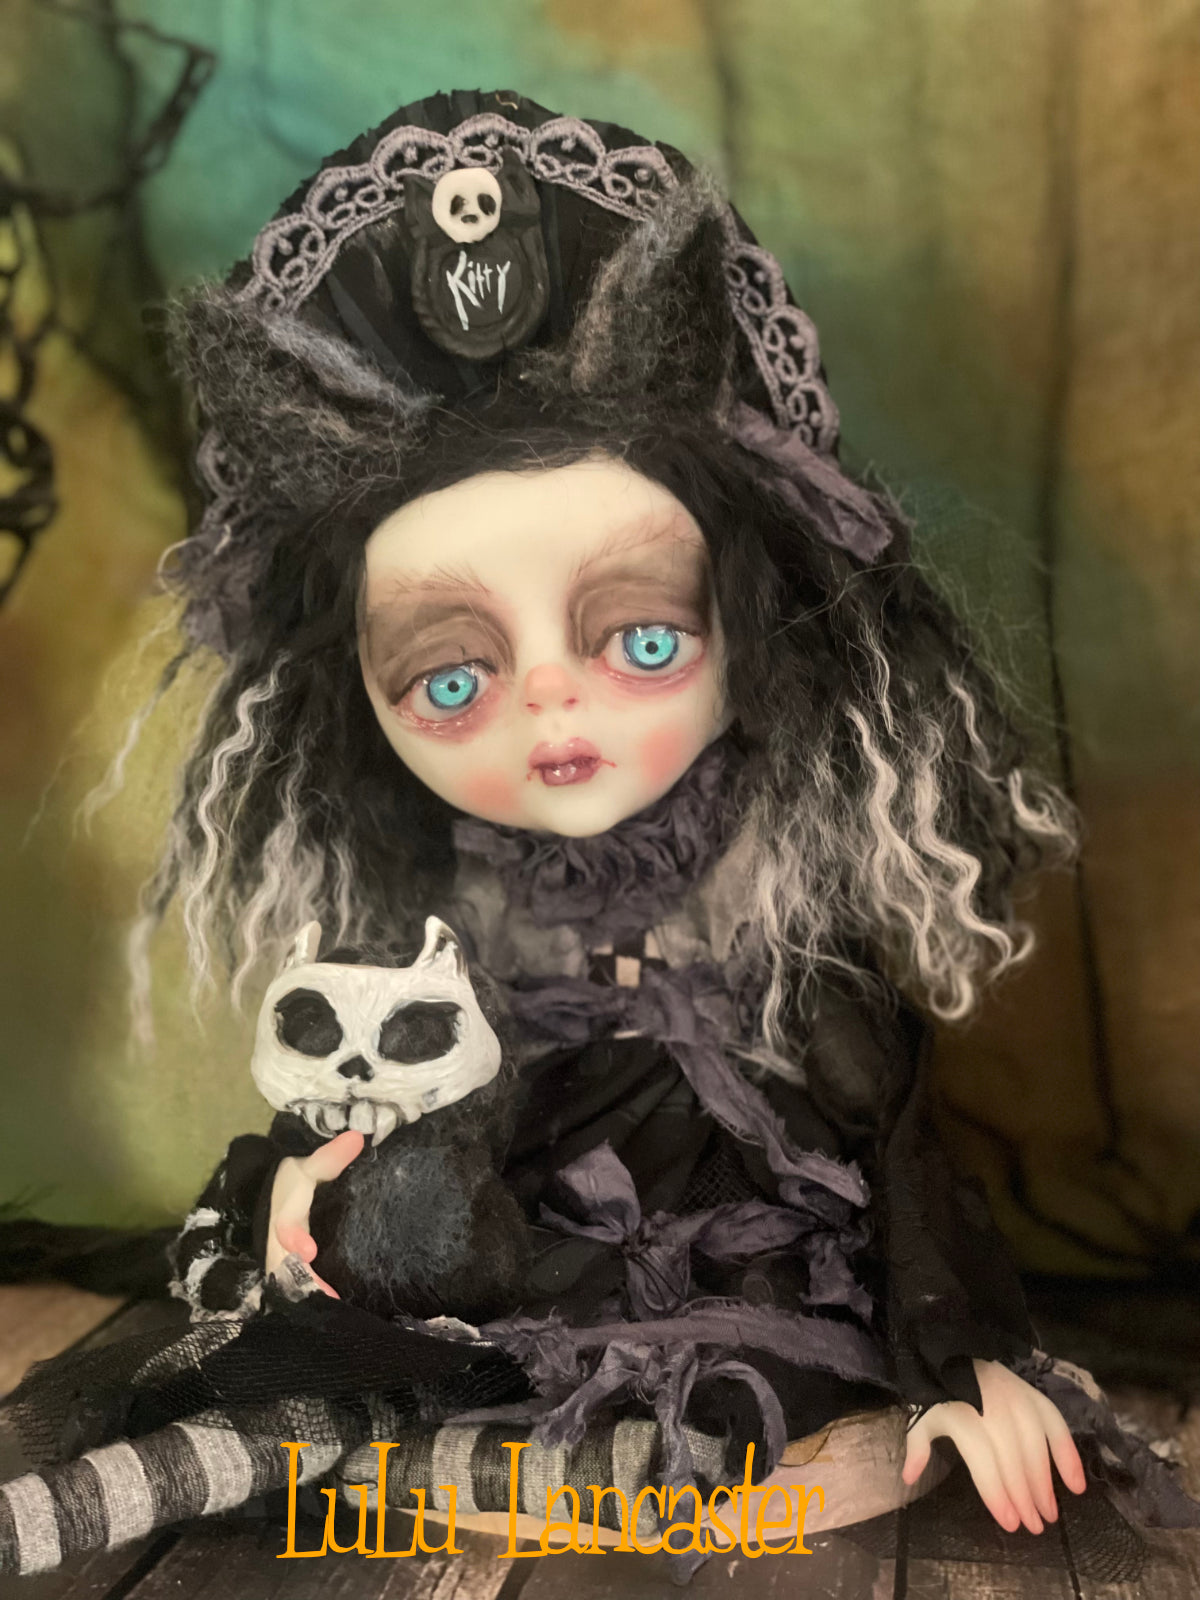 KittyKat dark Goth Sitter Original LuLu Lancaster Art Doll